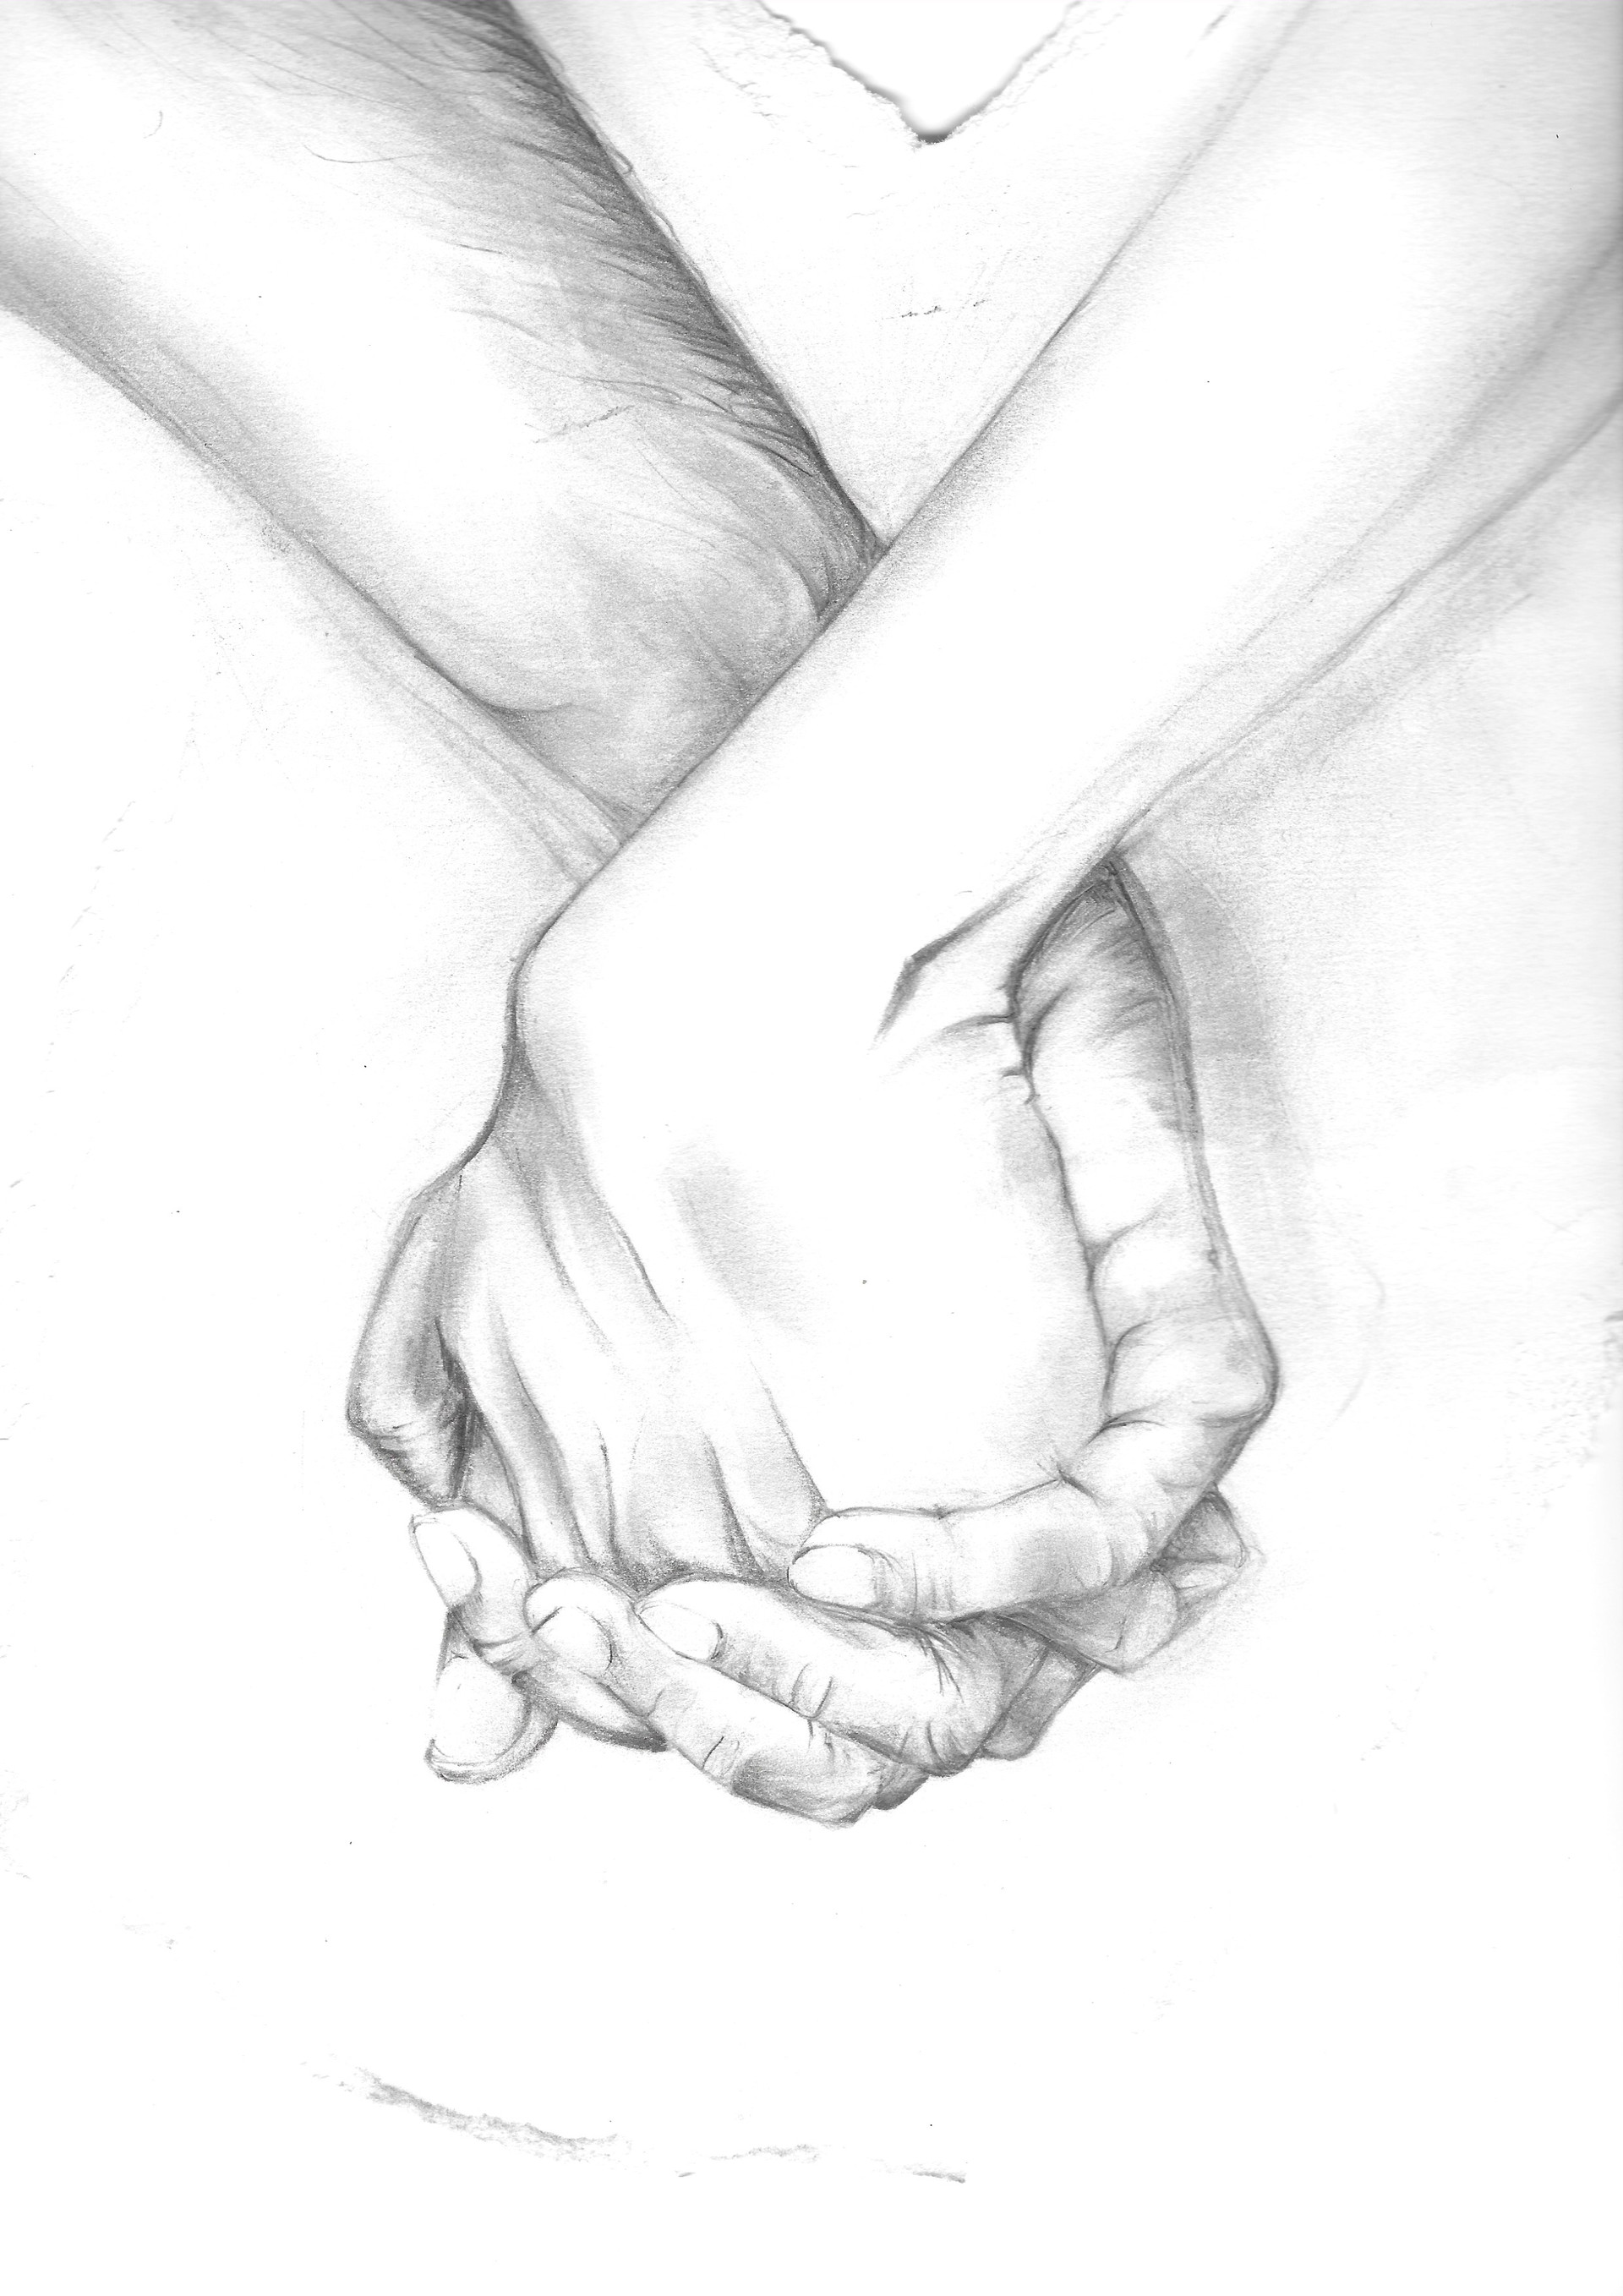 Romantic Couple, Sketch Art Love Illustration, Love Sketch, Couple In Love  Hand Drawn Sketch #1 Poster by Mounir Khalfouf - Pixels Merch, romantic  drawings 